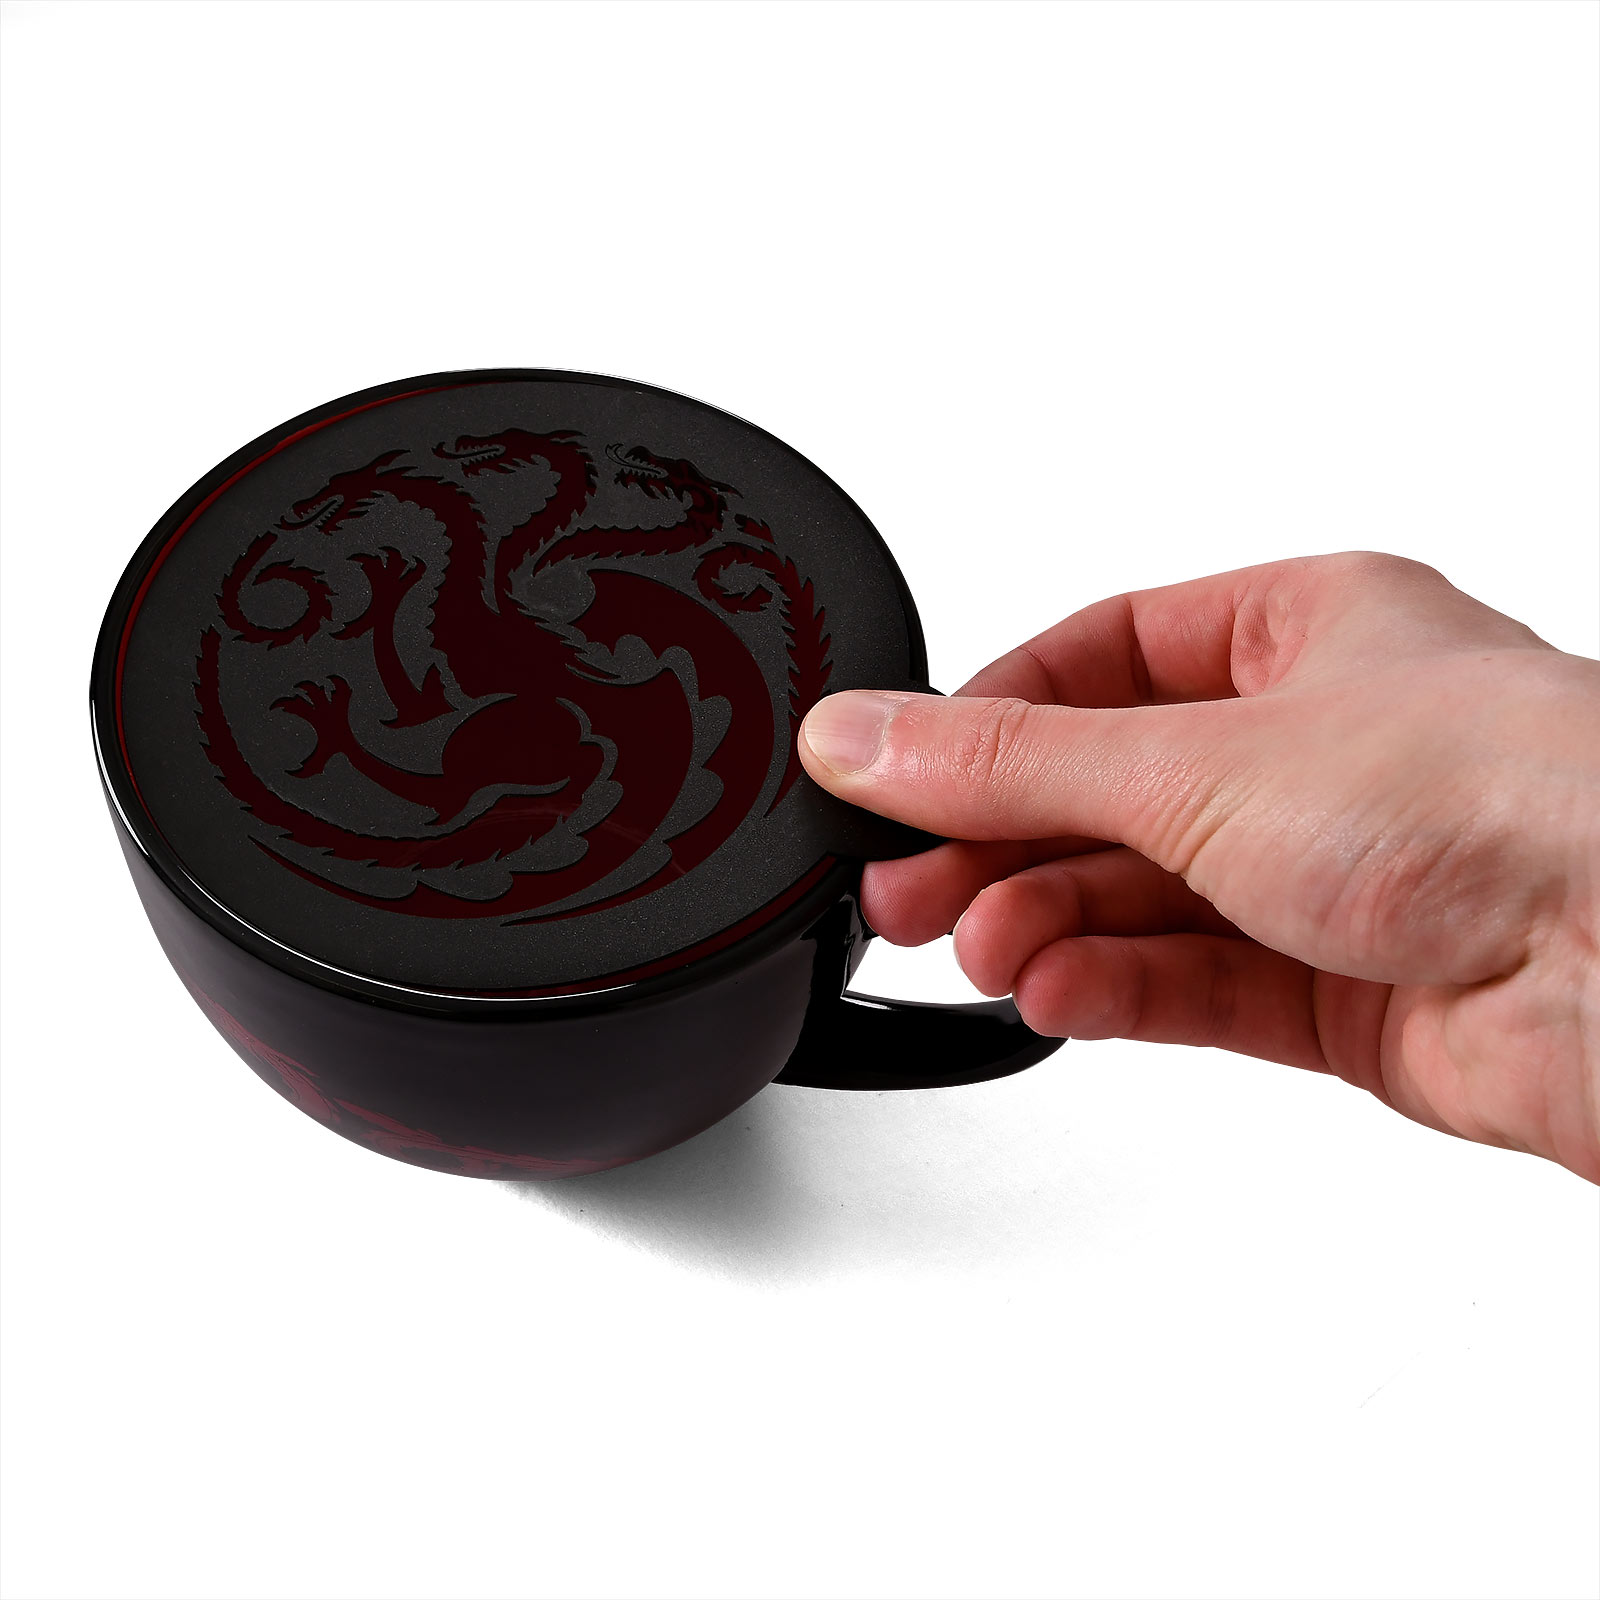 Game of Thrones - House Targaryen mug with stencil